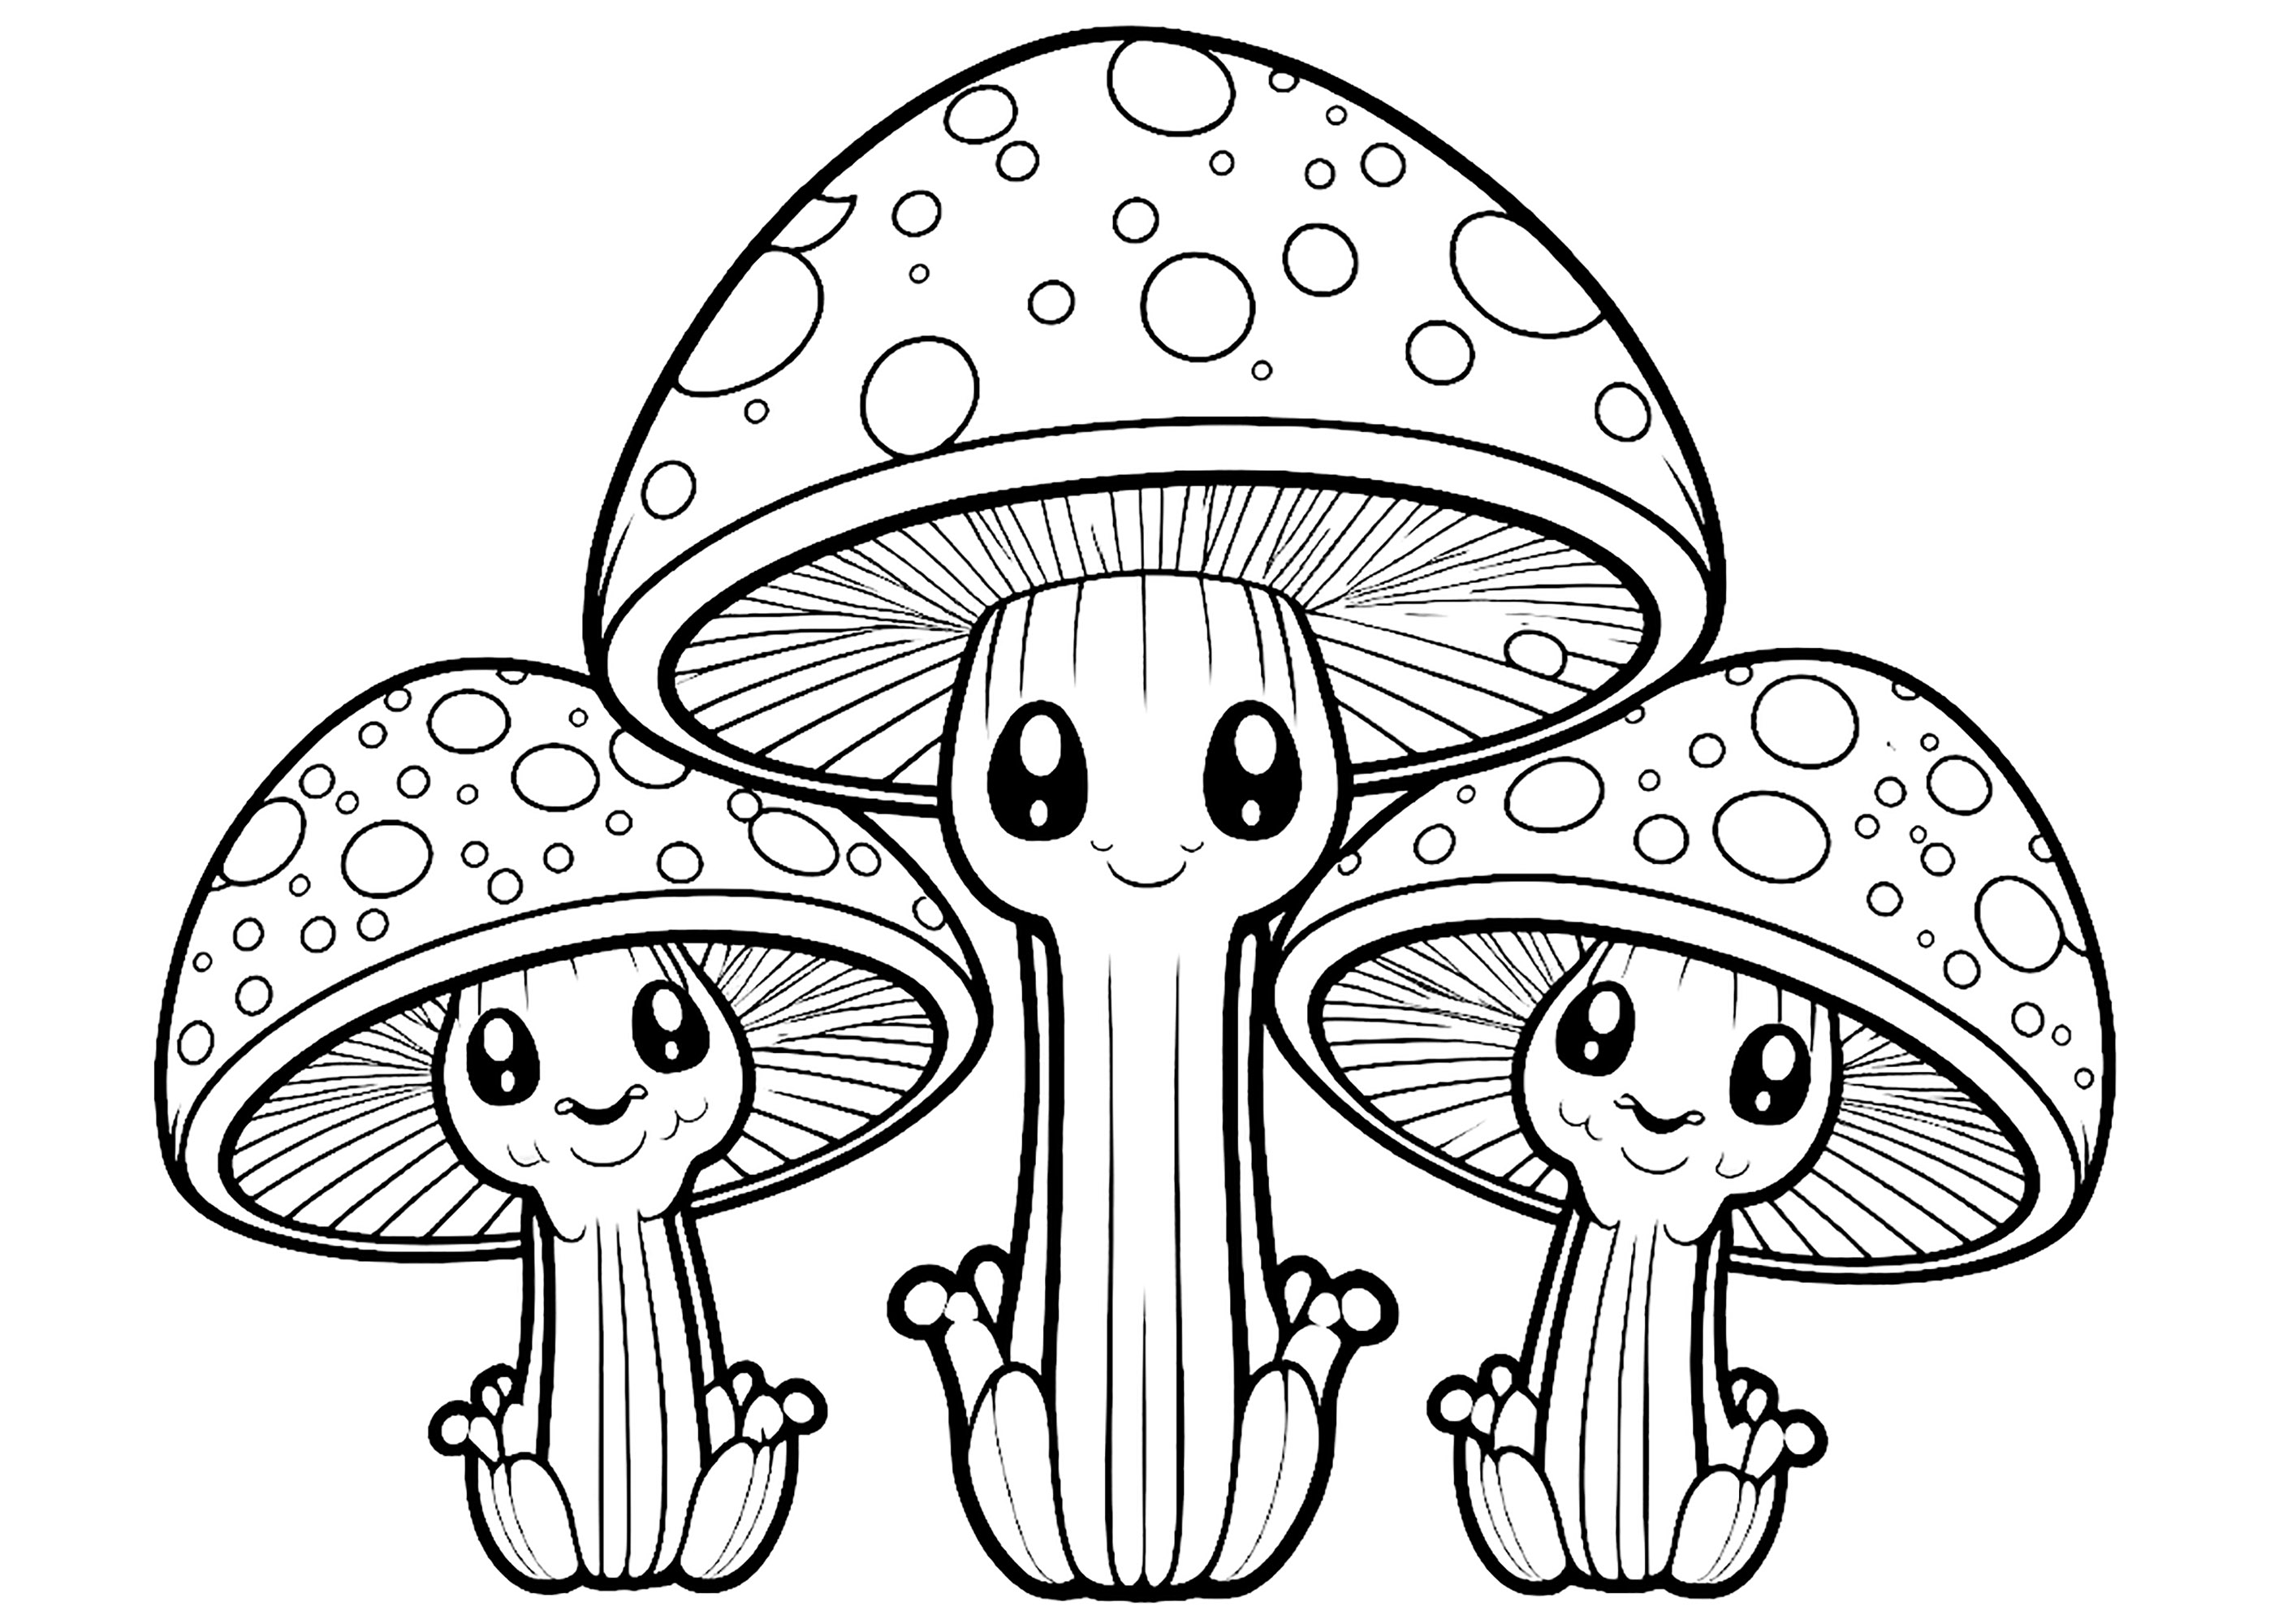 Three funny mushrooms with big eyes